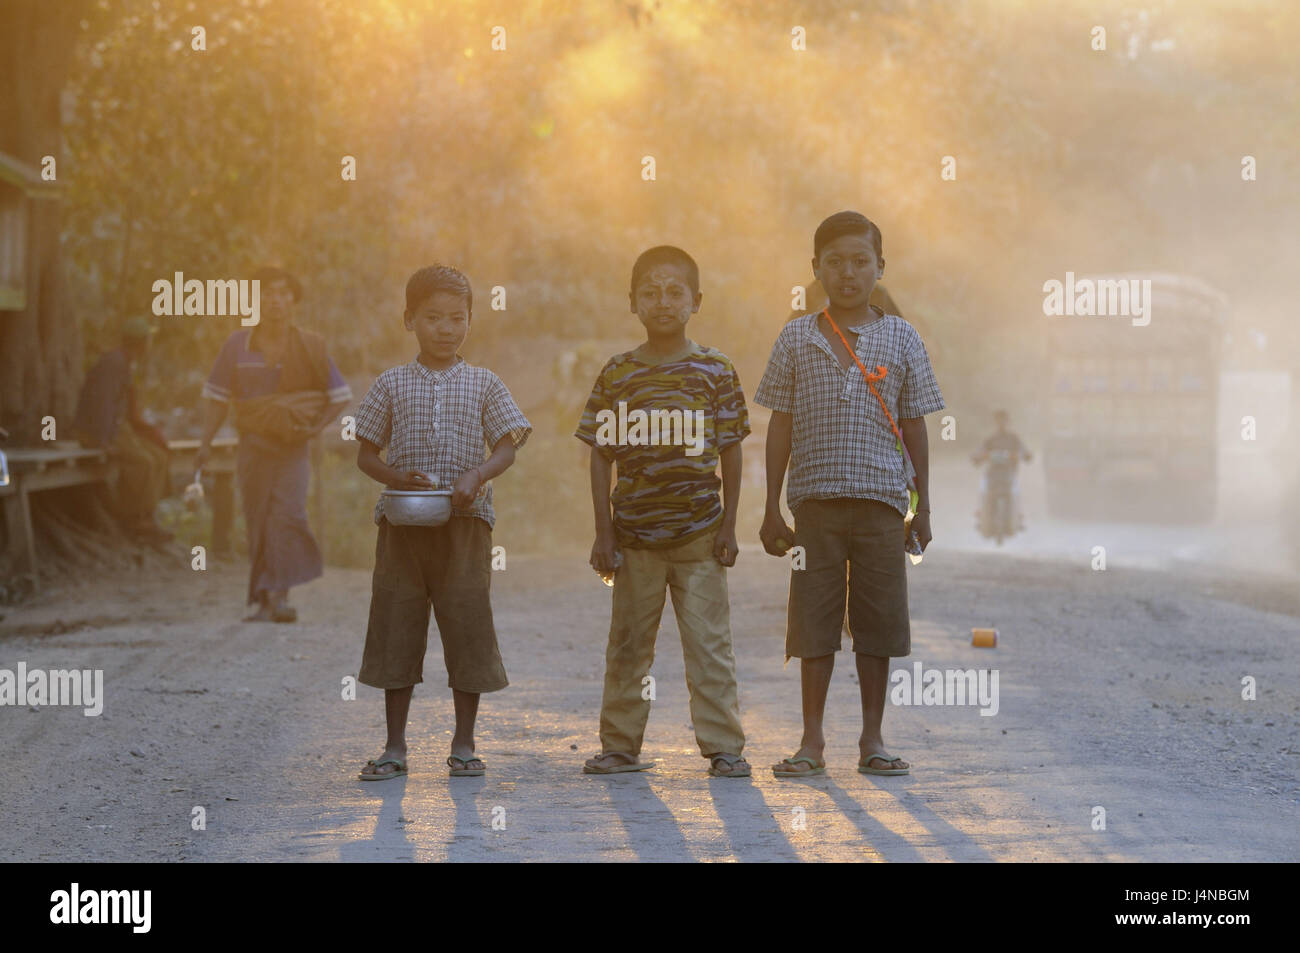 Children, street, stand, evening light, Myanmar, Stock Photo